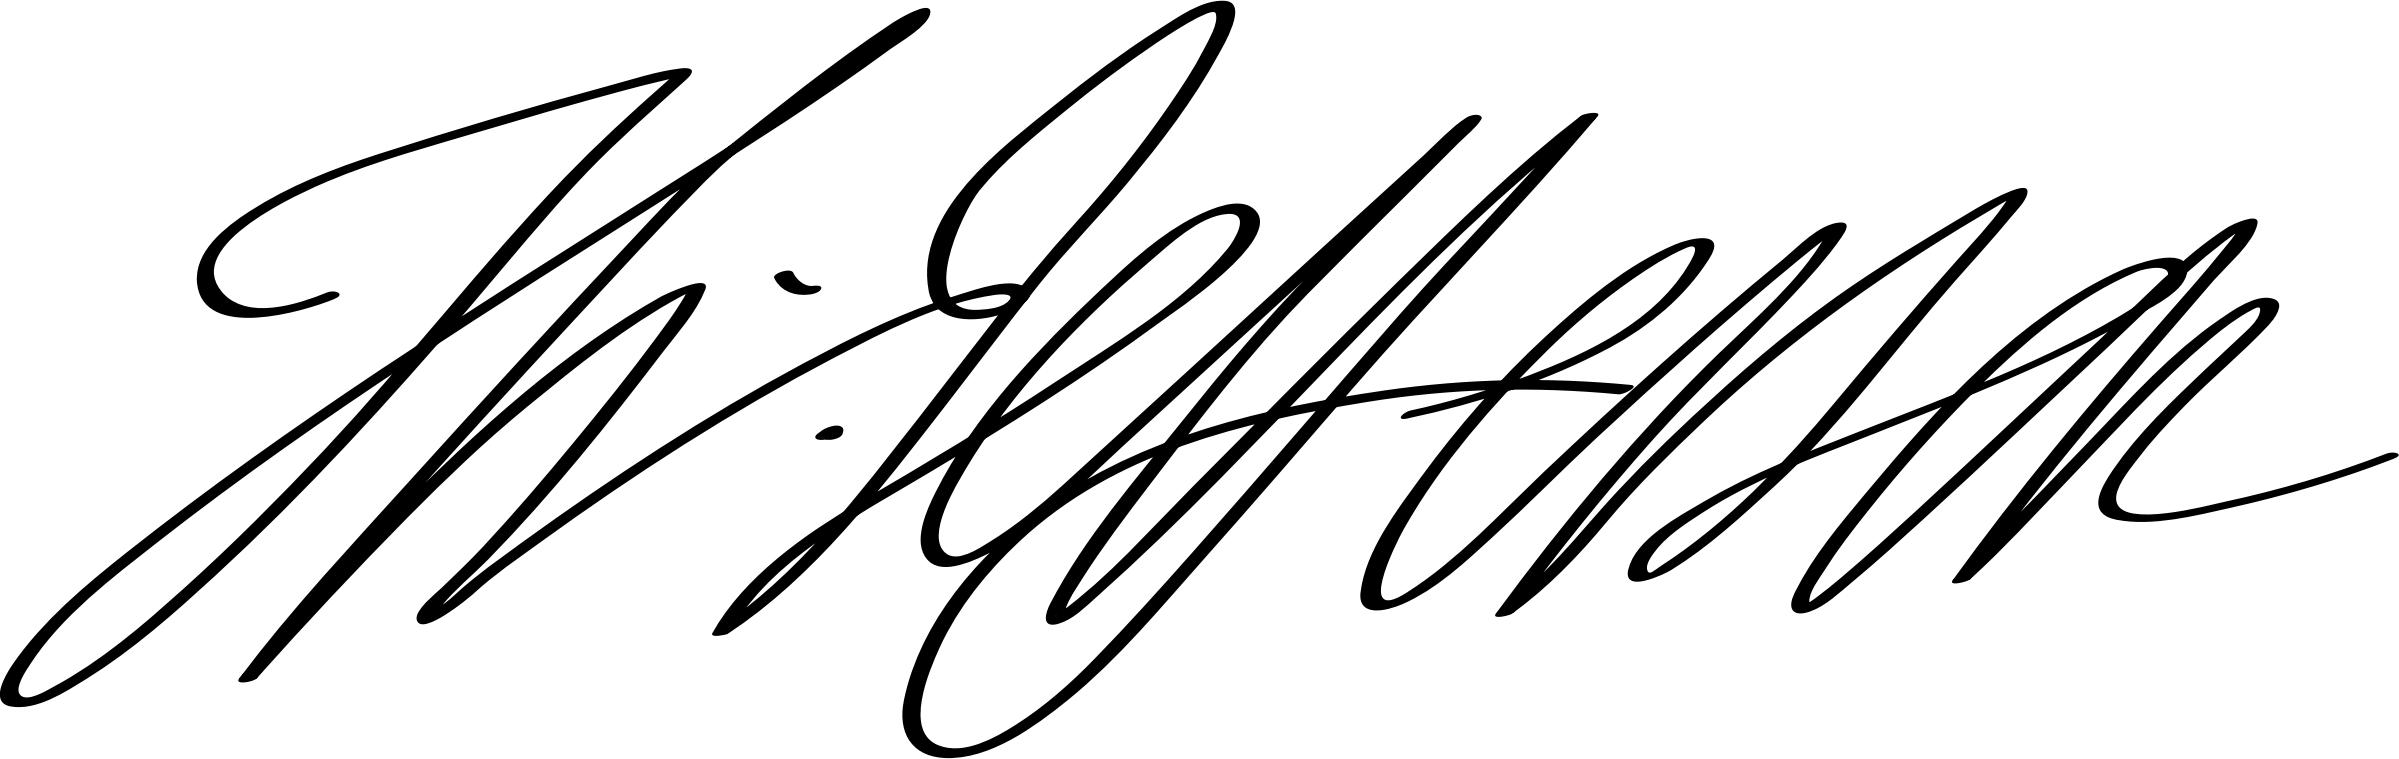 Thomas Jefferson Signature png